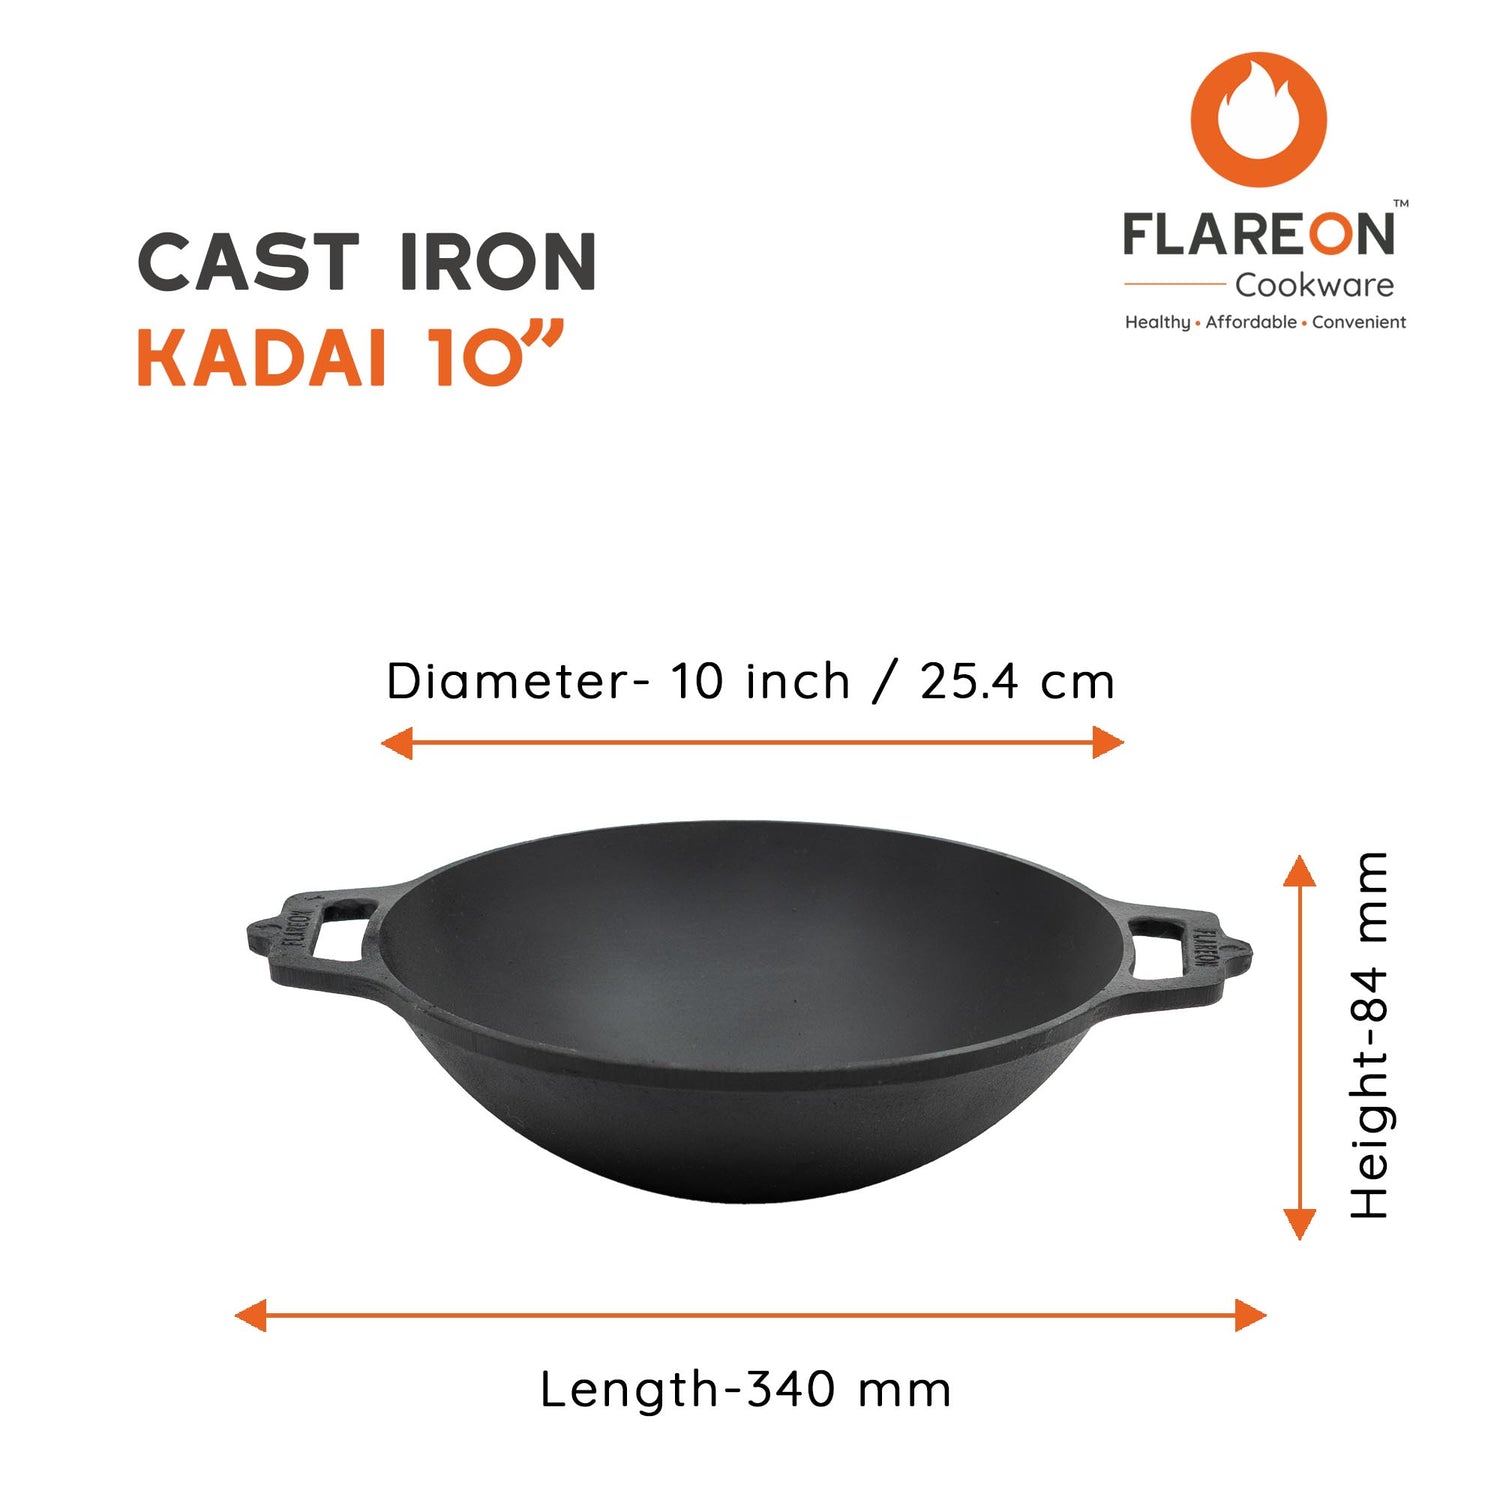 FlareOn's Cast Iron Kadai 10-Inch- Dimensions